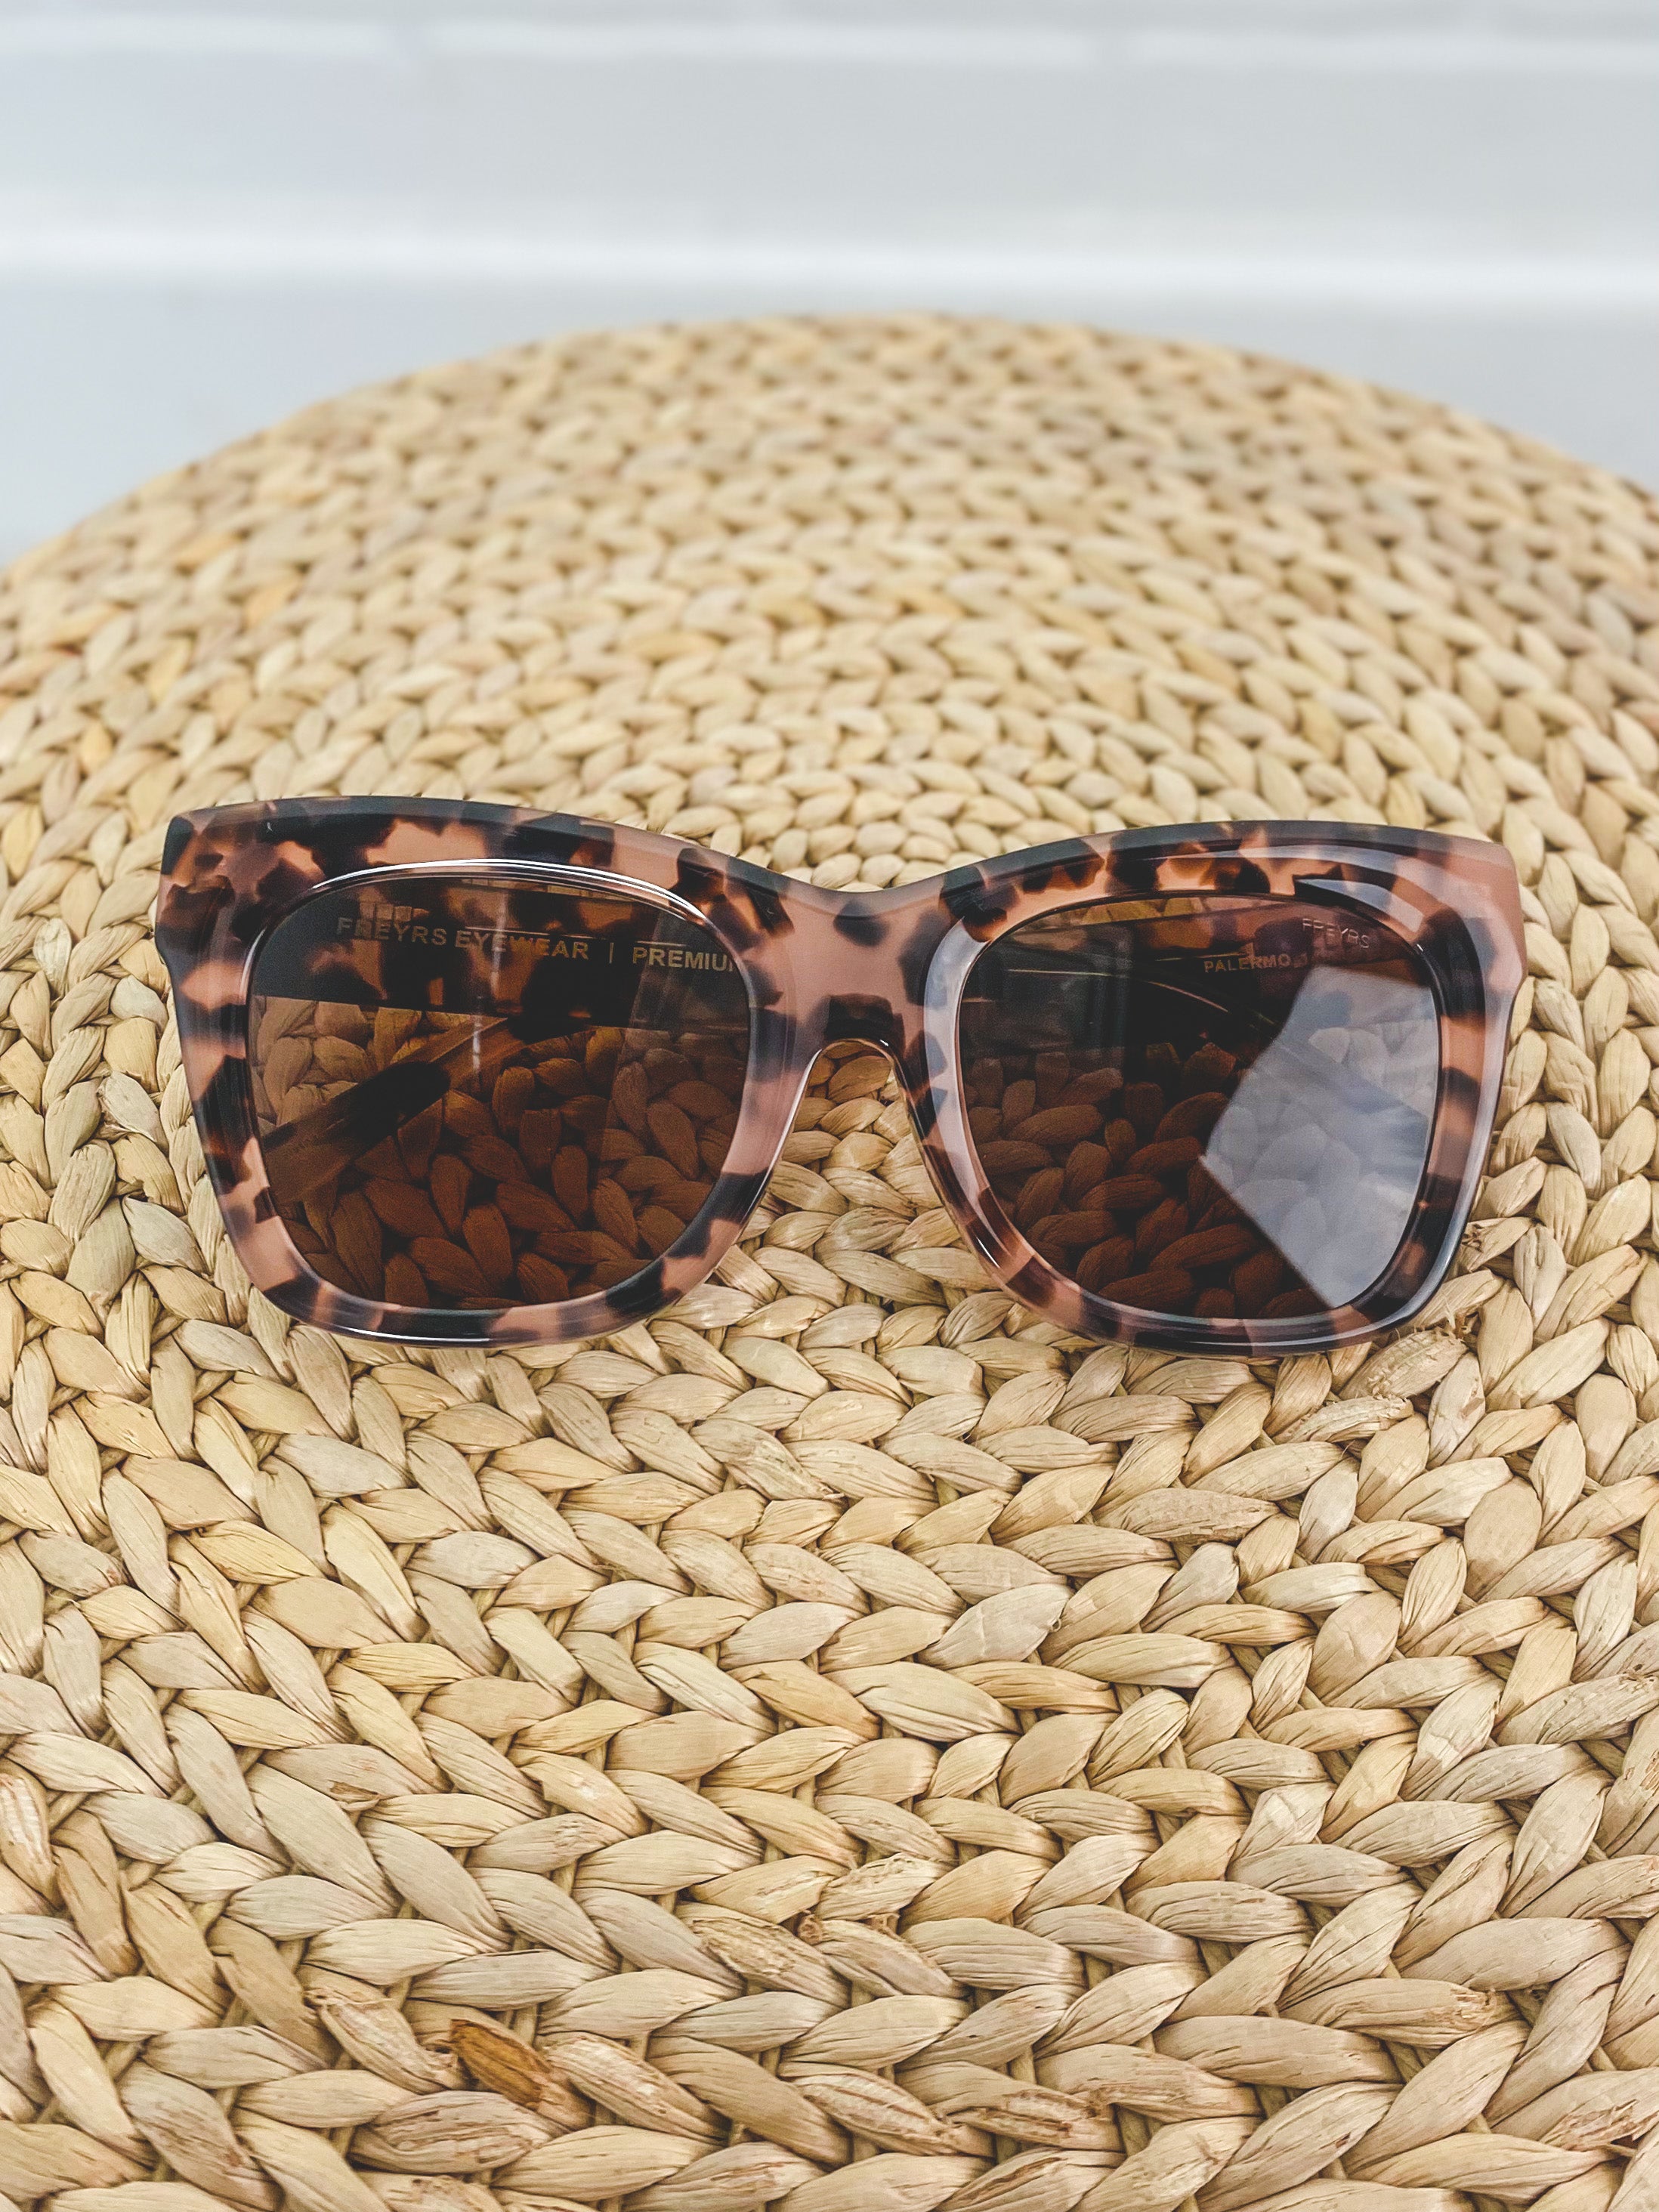 Freyrs Palermo sunglasses pink tortoise - Cute Sunglasses - Fun Wayfarers at Lush Fashion Lounge Boutique in Oklahoma